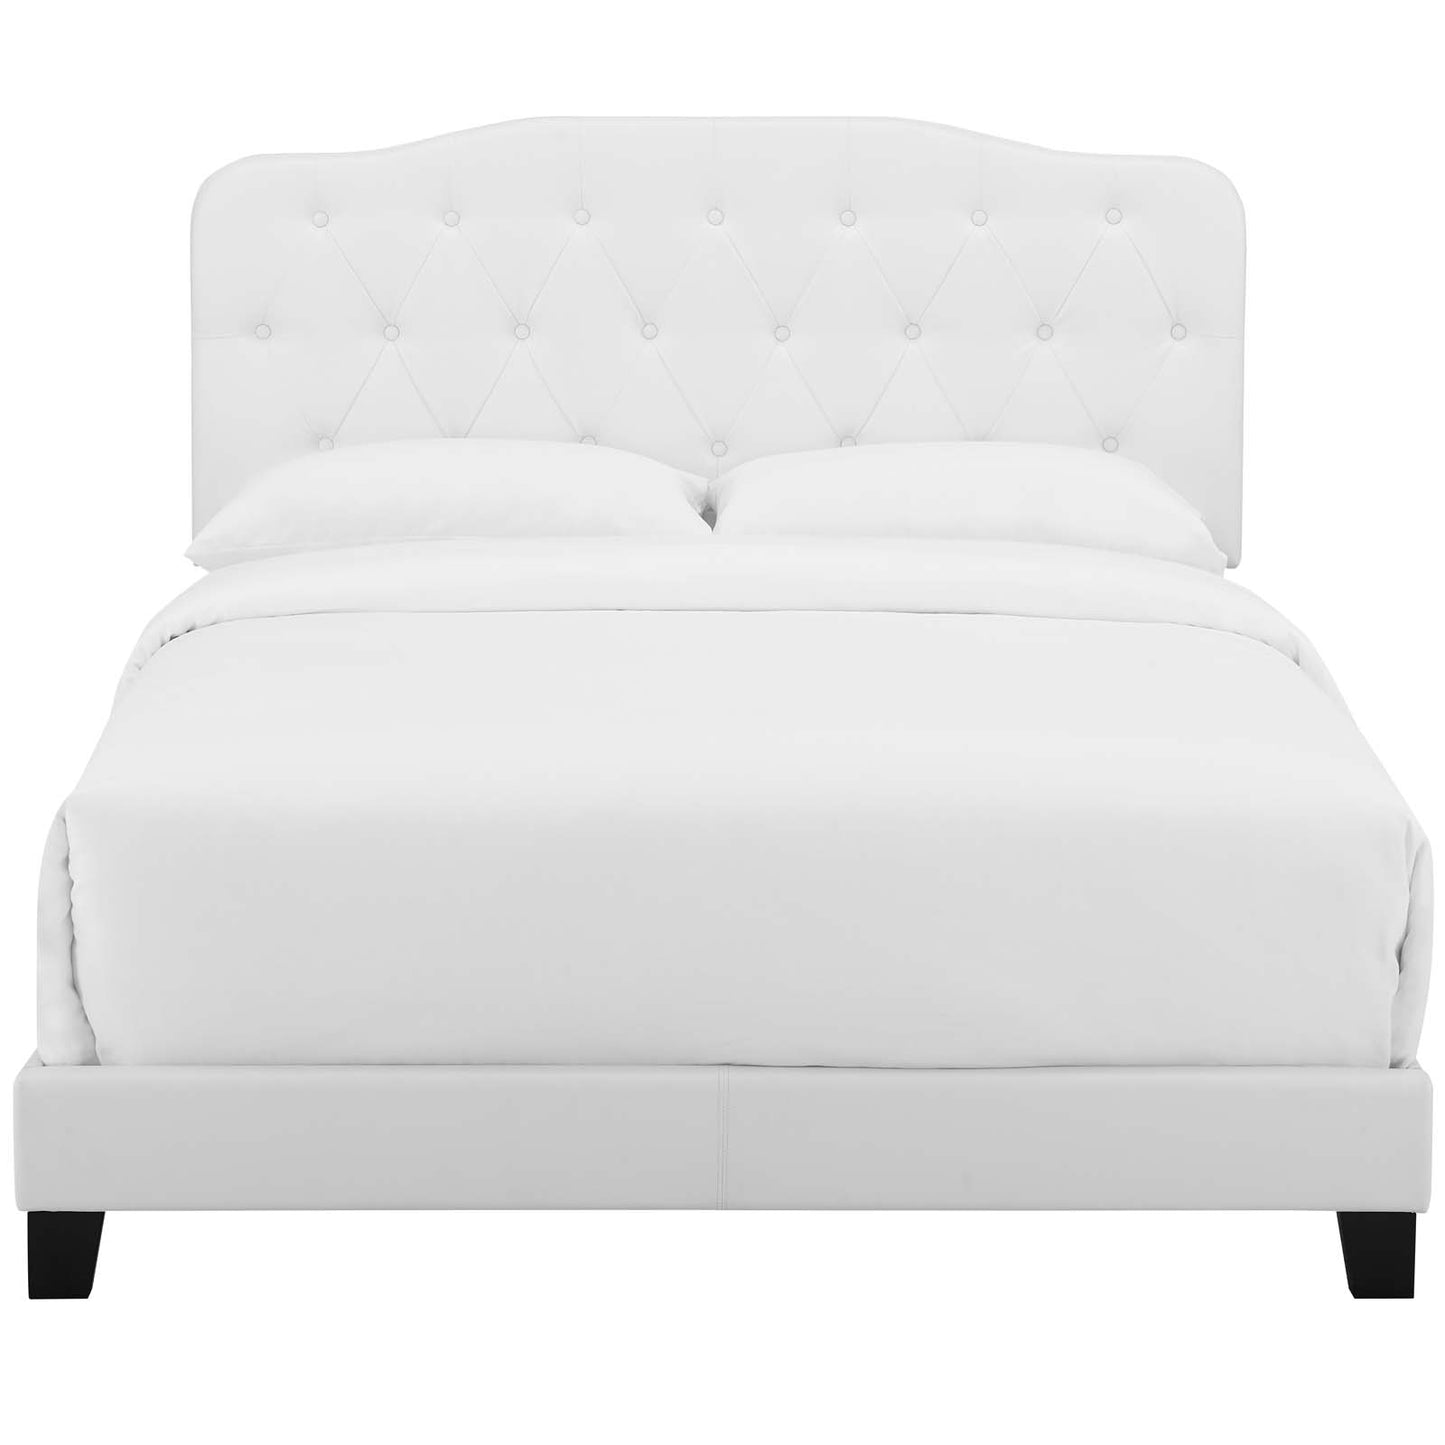 Amelia Full Faux Leather Bed White MOD-5991-WHI